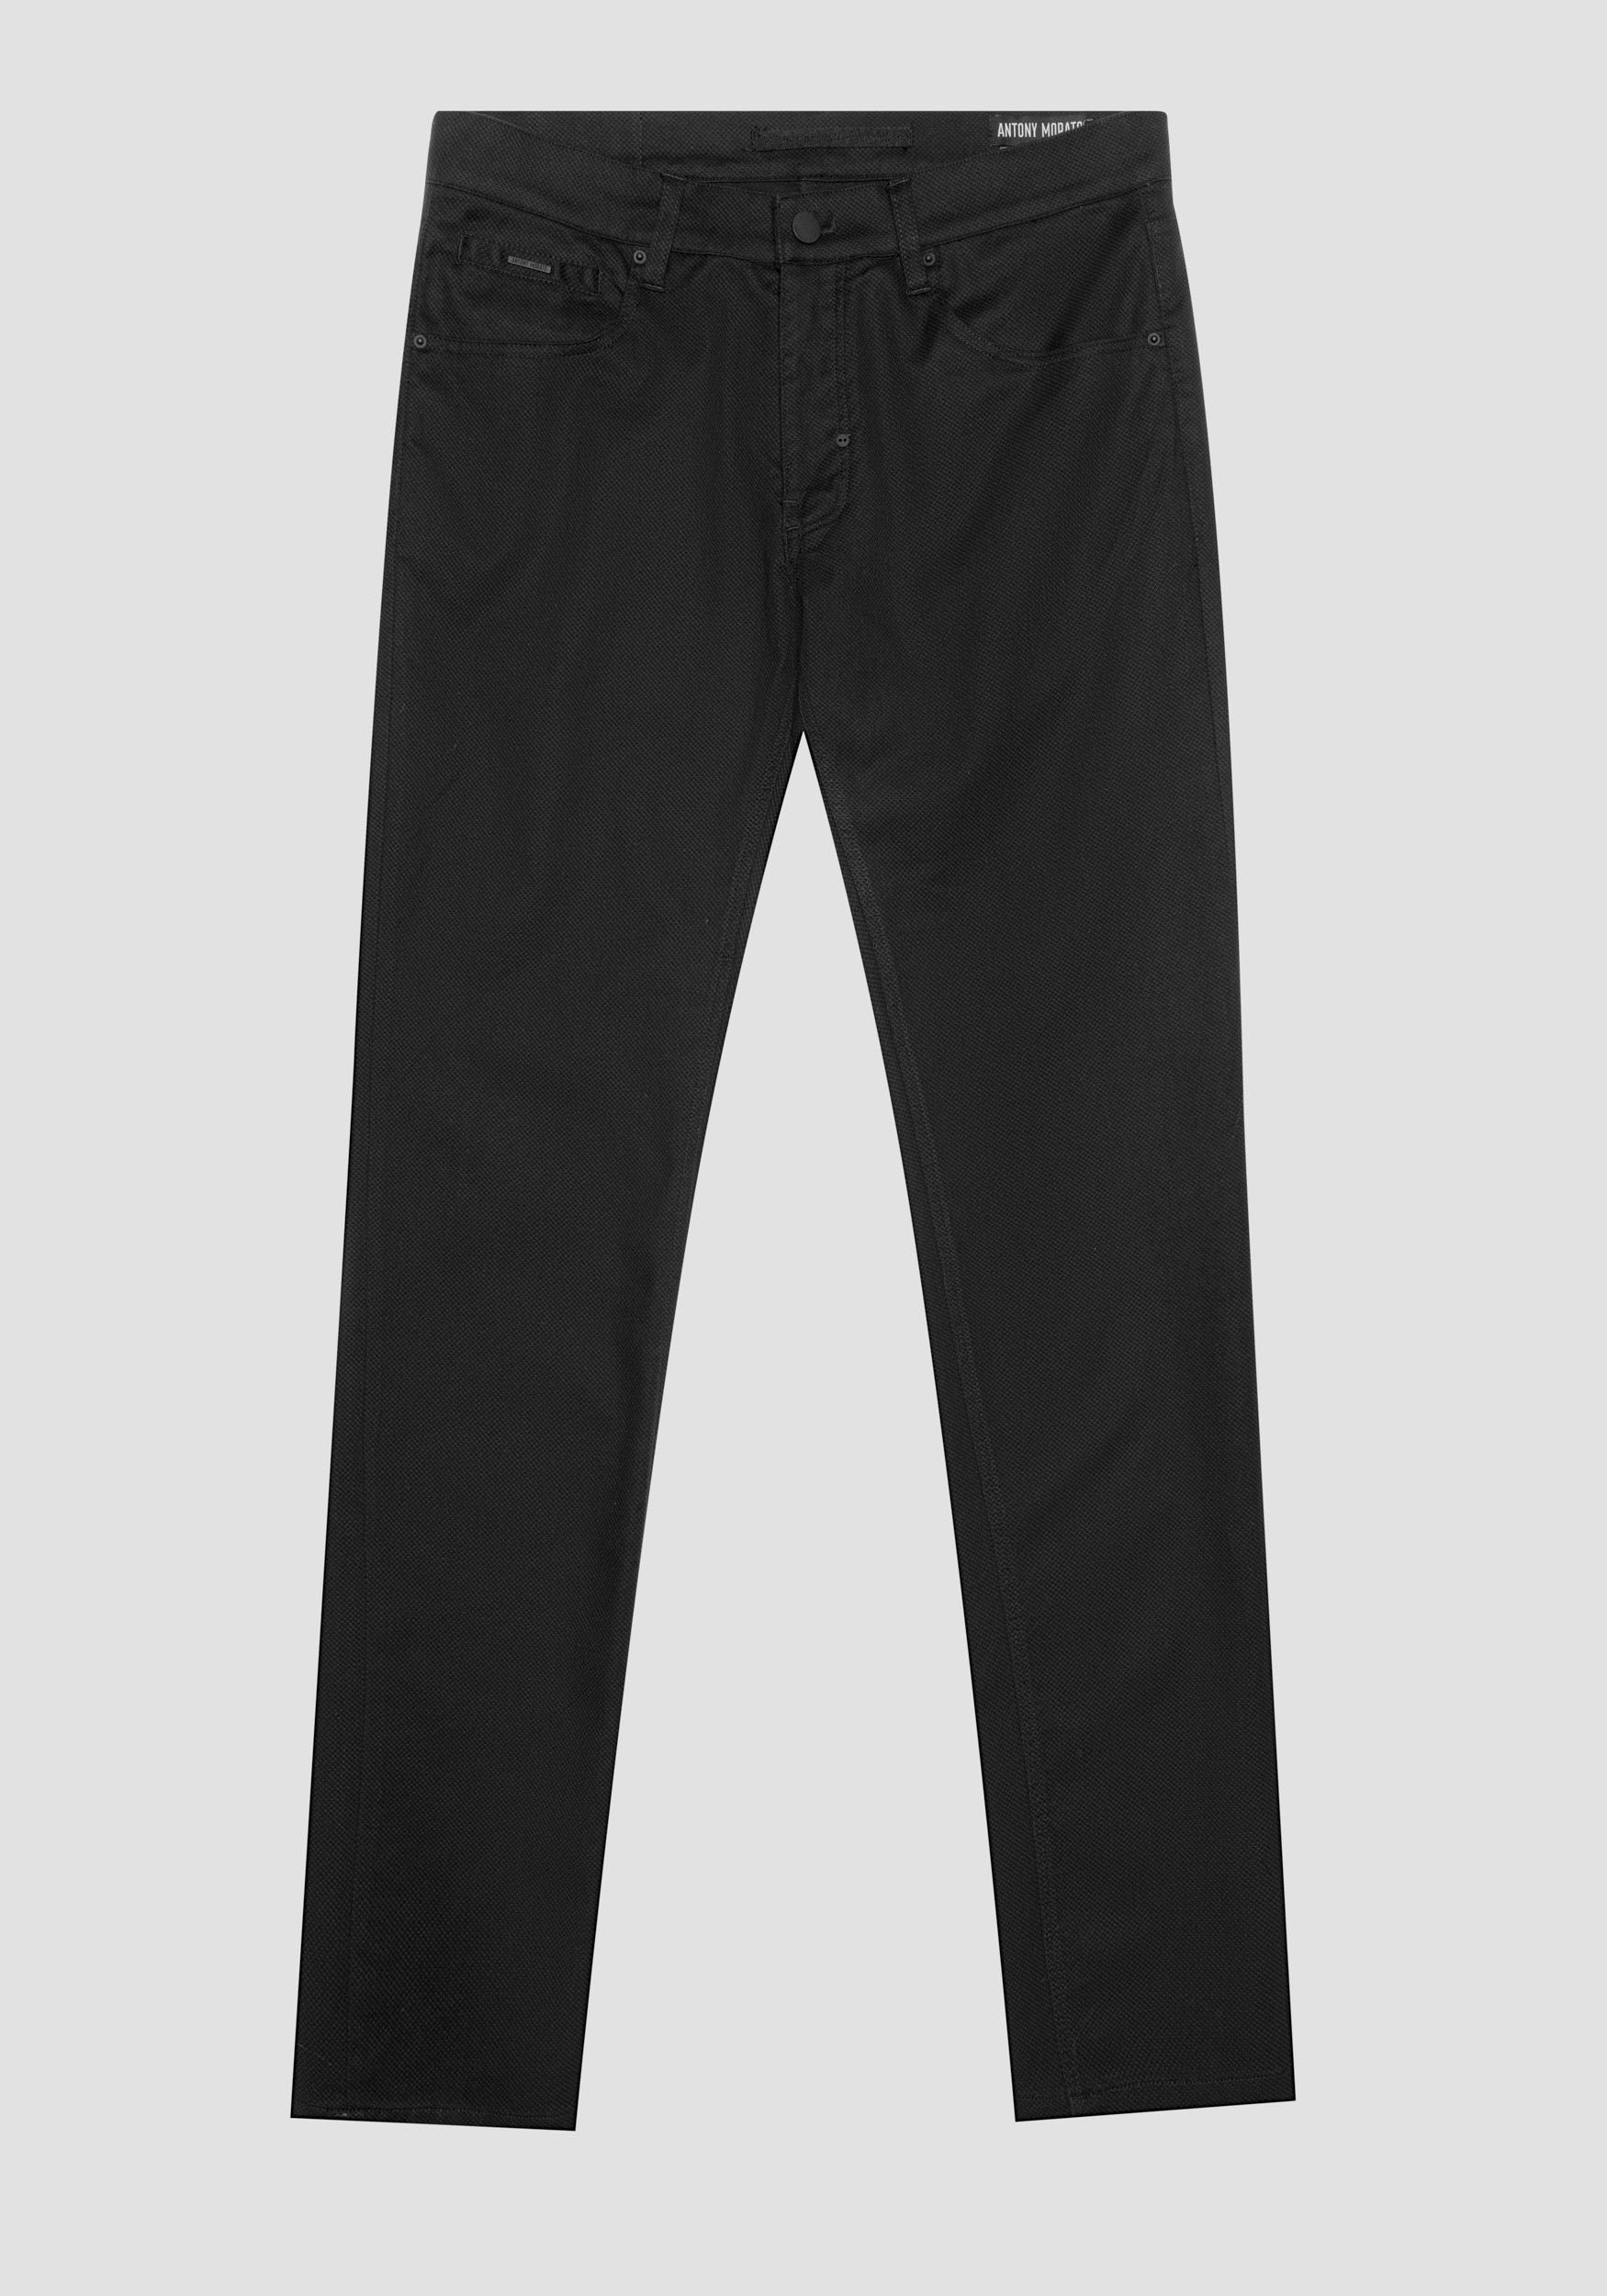 Antony Morato Pantalon Skinny Fit Barret En Coton Armure Stretch Noir | Homme Pantalons